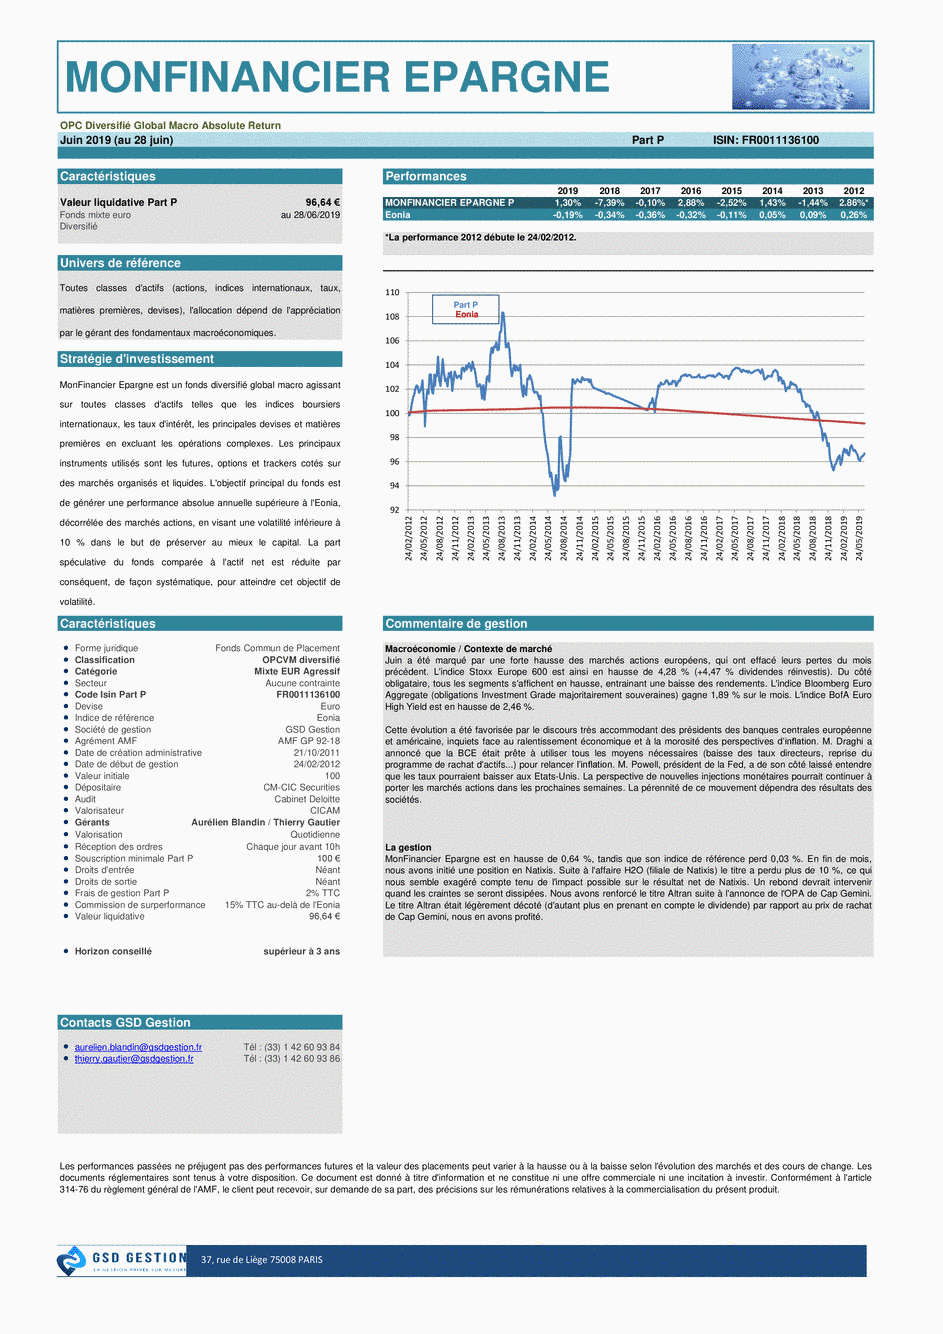 Reporting Monfinancier Epargne P - 05/07/2019 - undefined